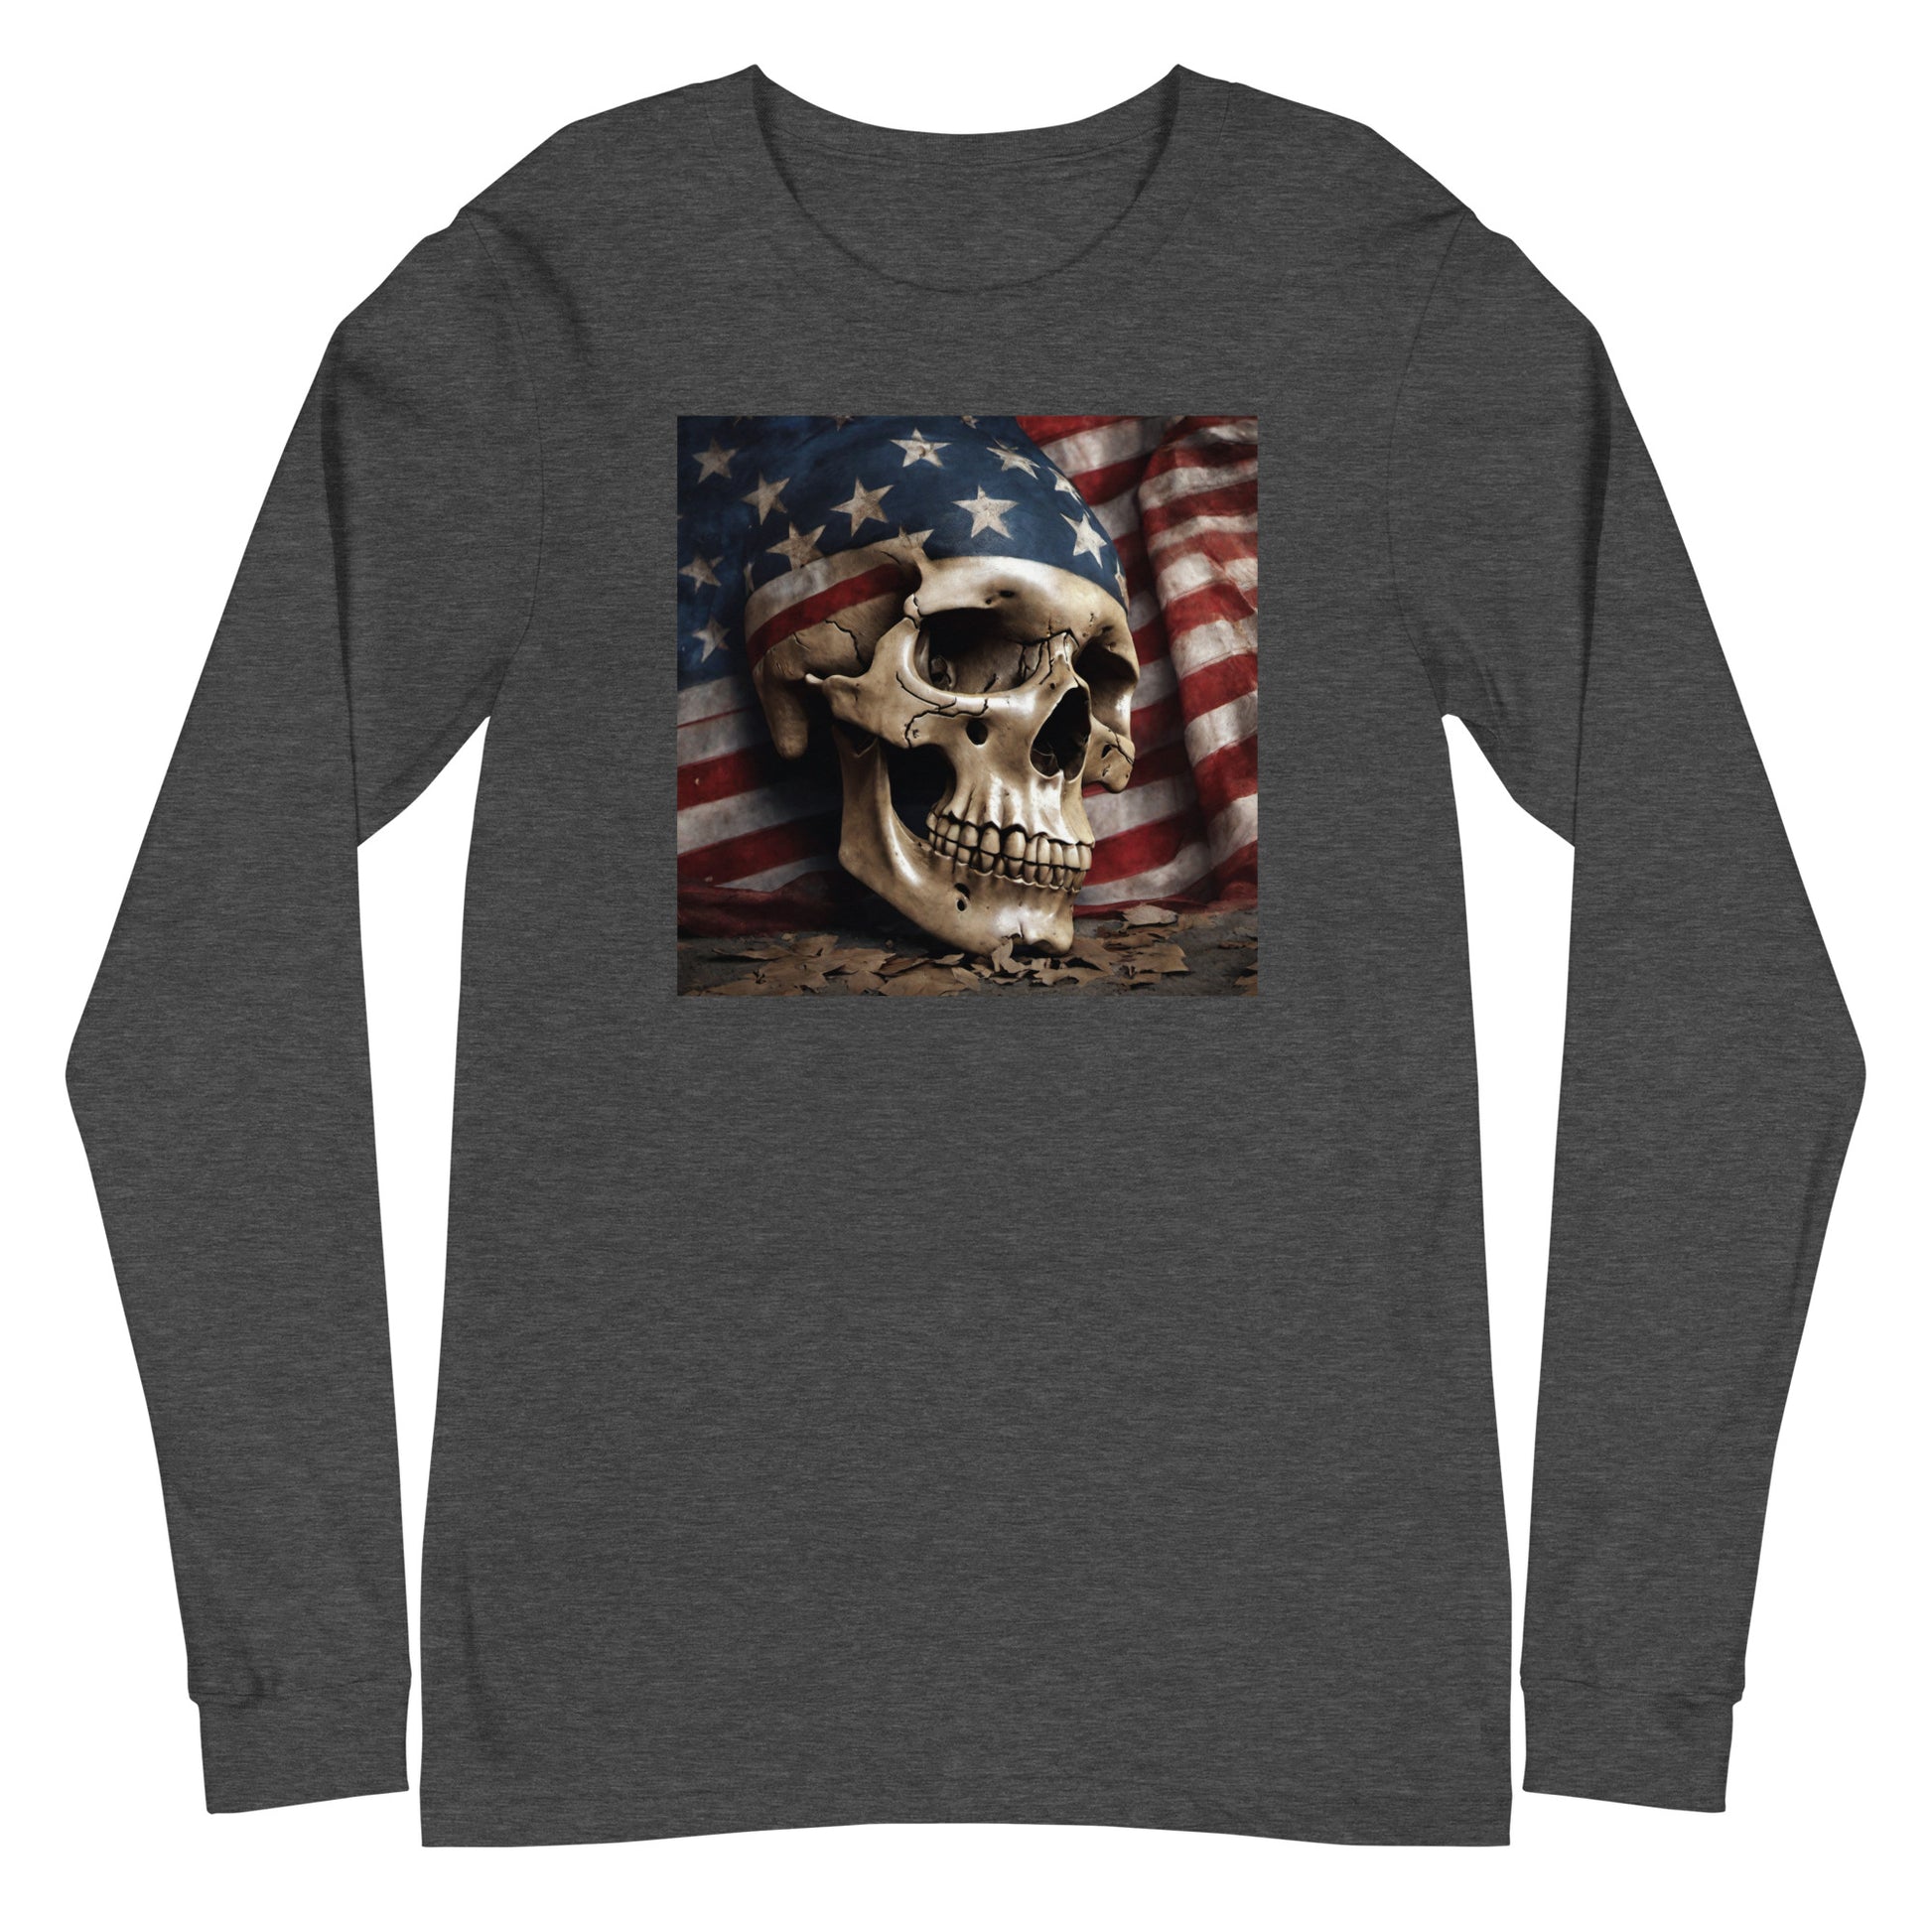 Skull and Flag Print Long Sleeve Tee Dark Grey Heather